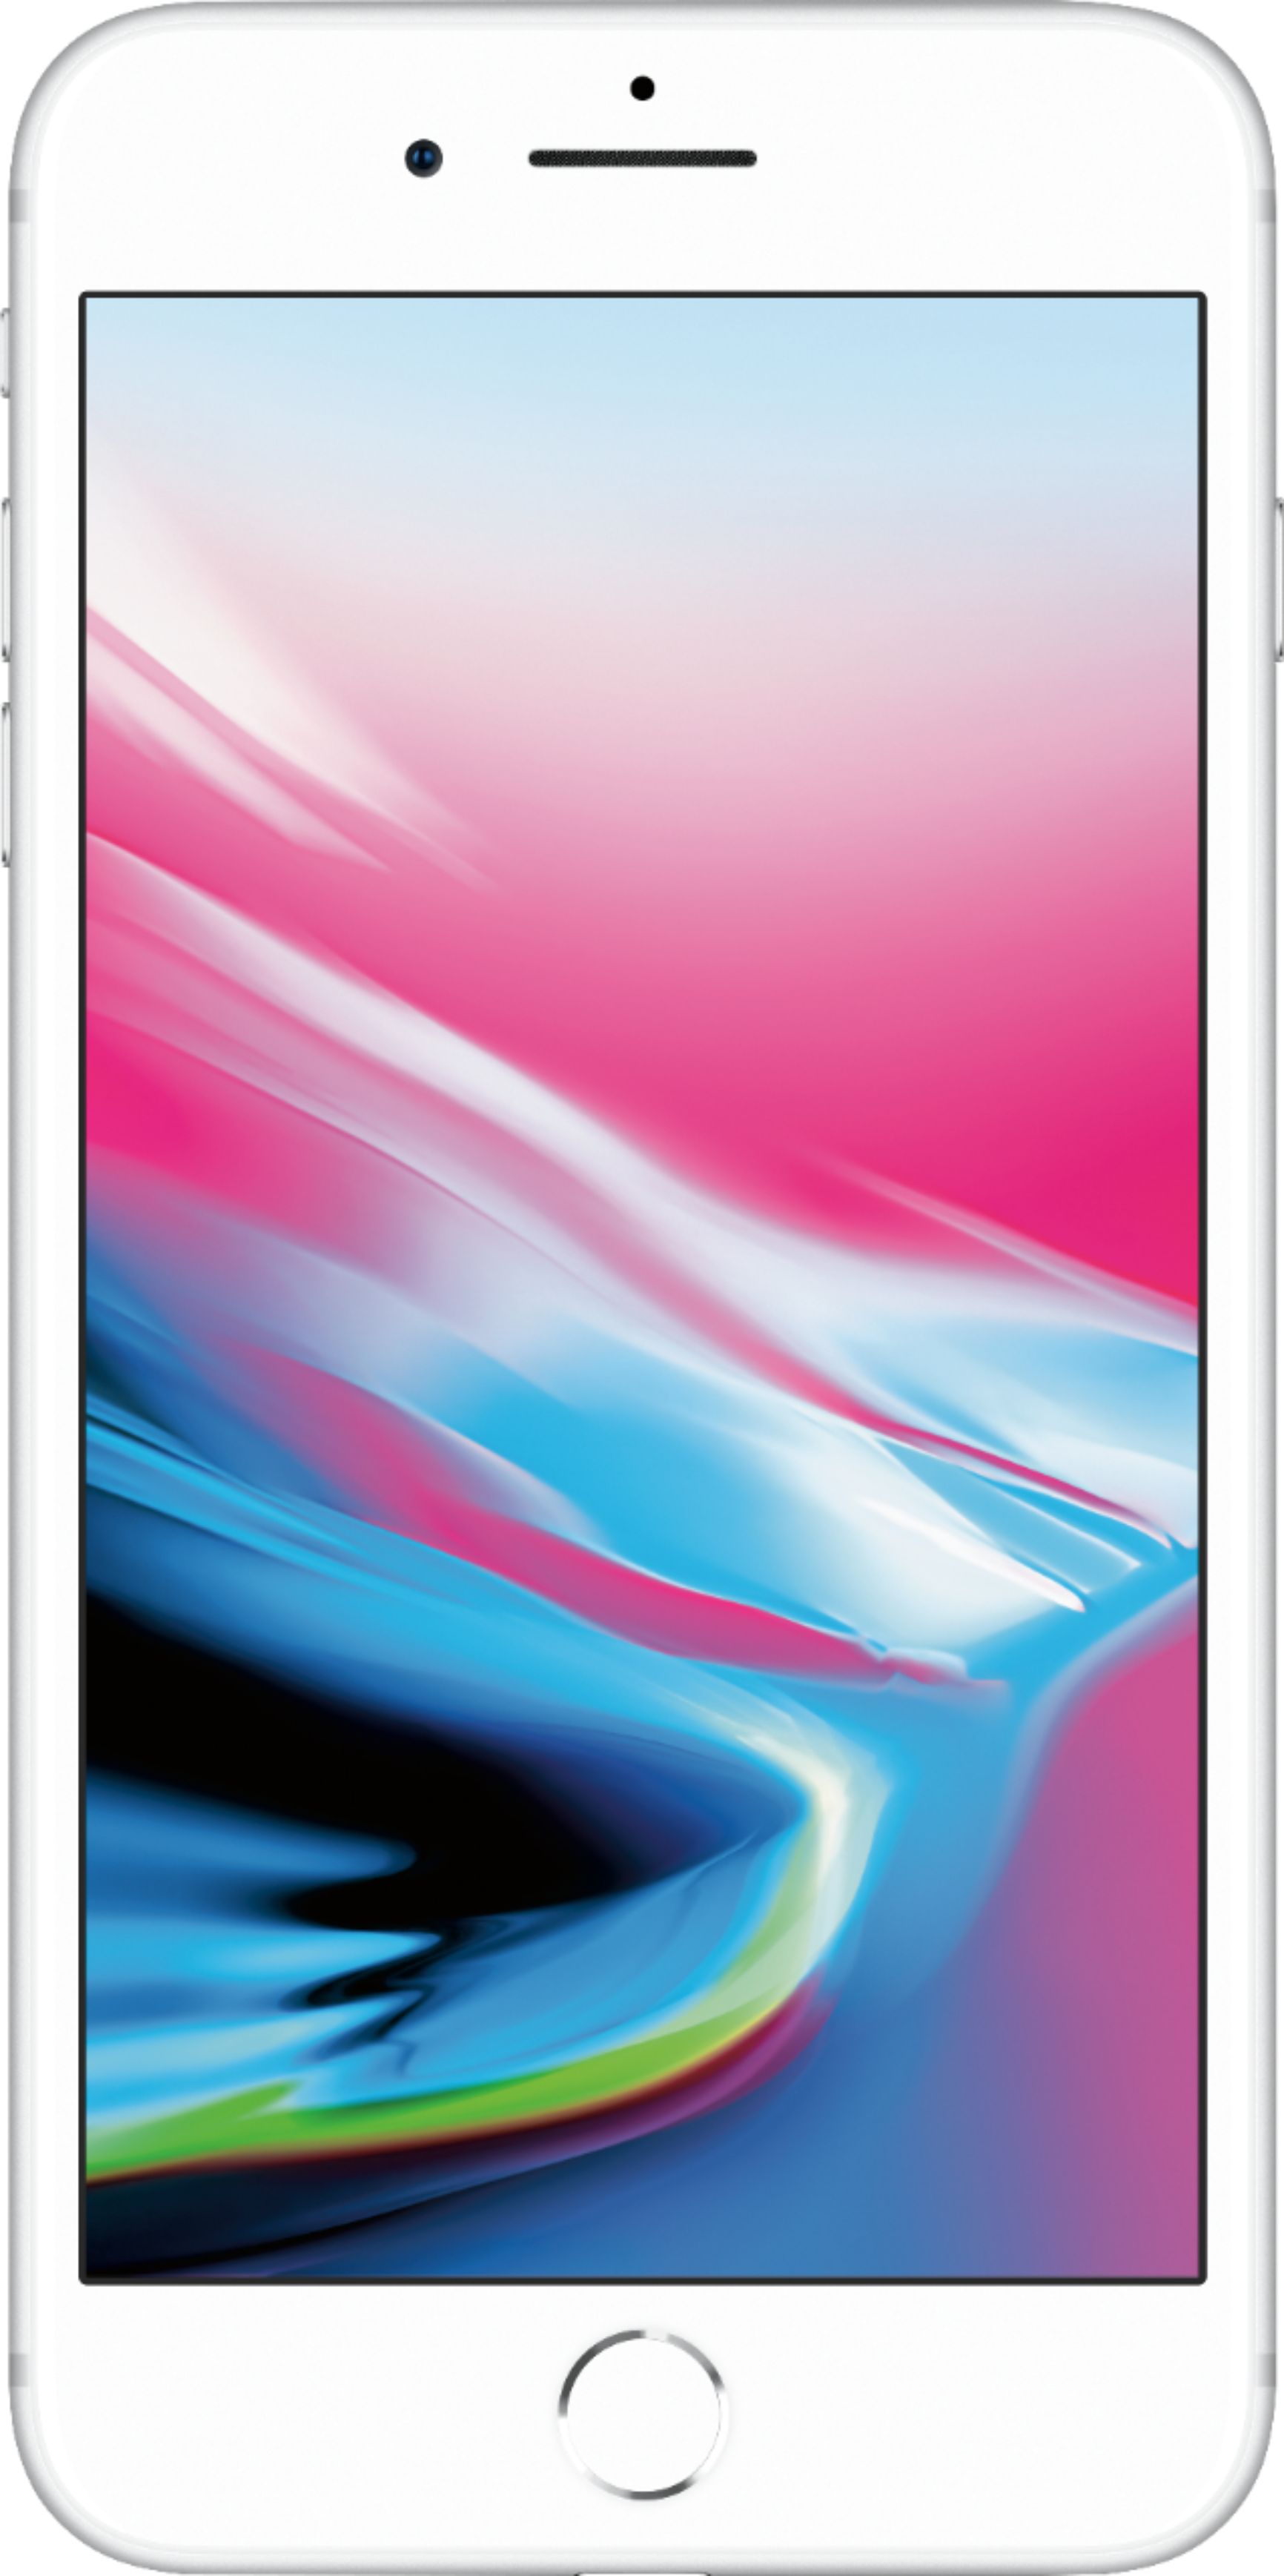 Apple Iphone 8 Plus 64gb Silver Verizon Mq8e2ll A Best Buy